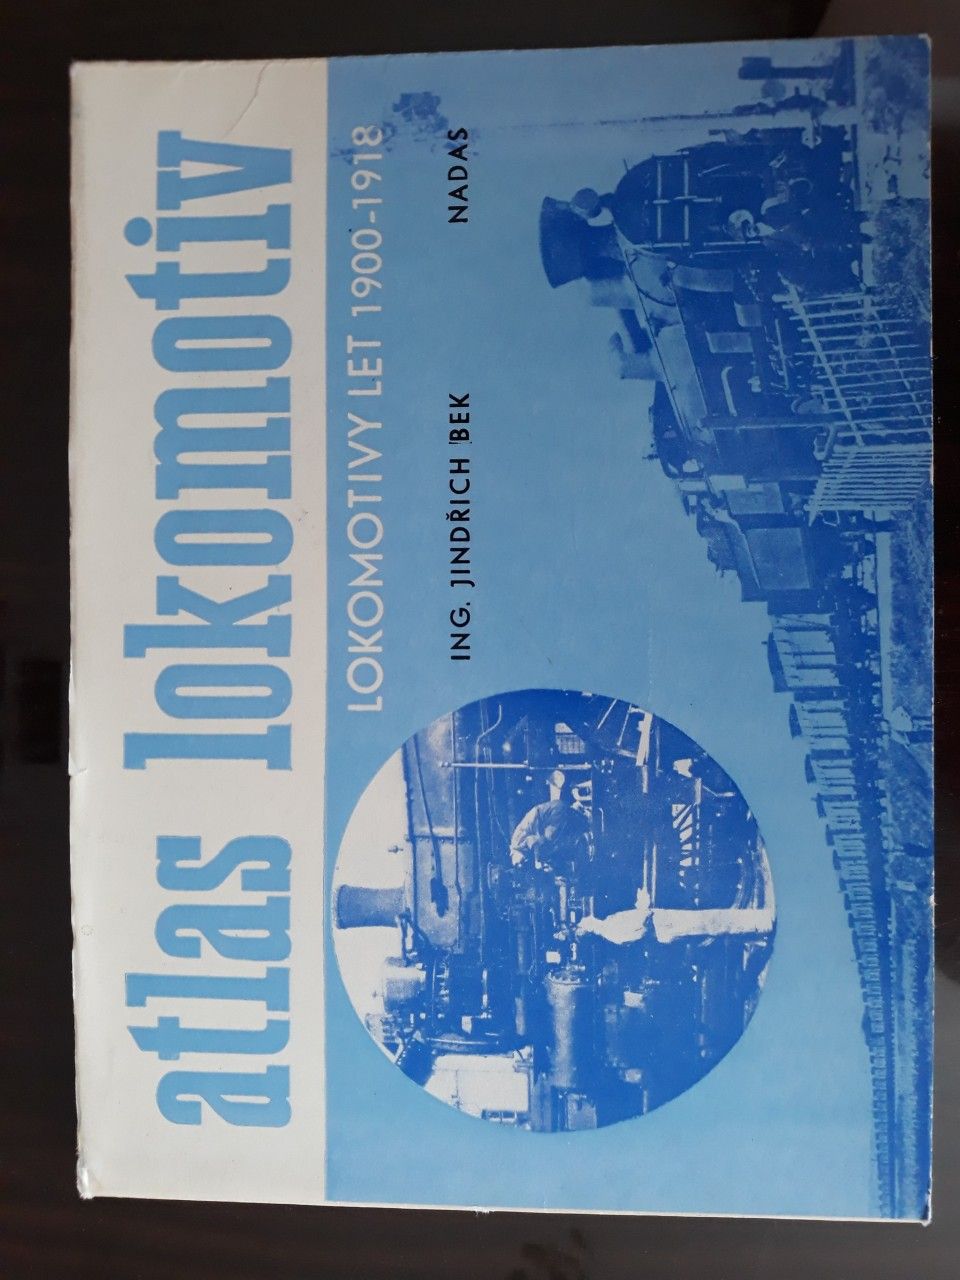 Atlas lokokomotiv - lokomotivy let 1900-1918 - Jindich Bek 1980